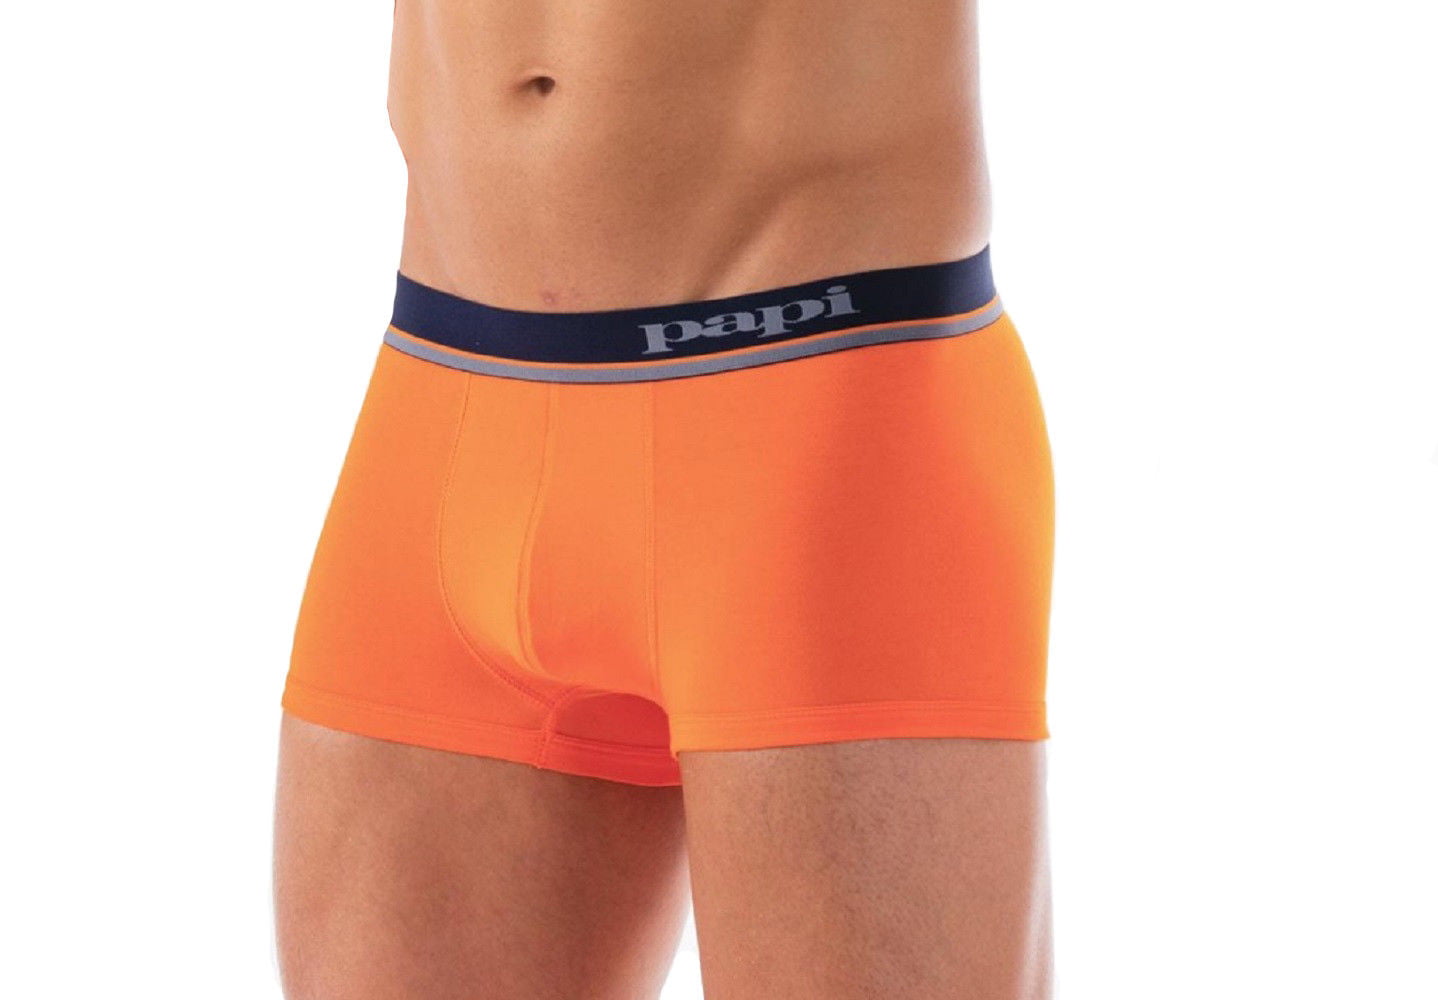 Papi 3-Pack Men's Underwear Stretch Cotton Brazilian Trunks 